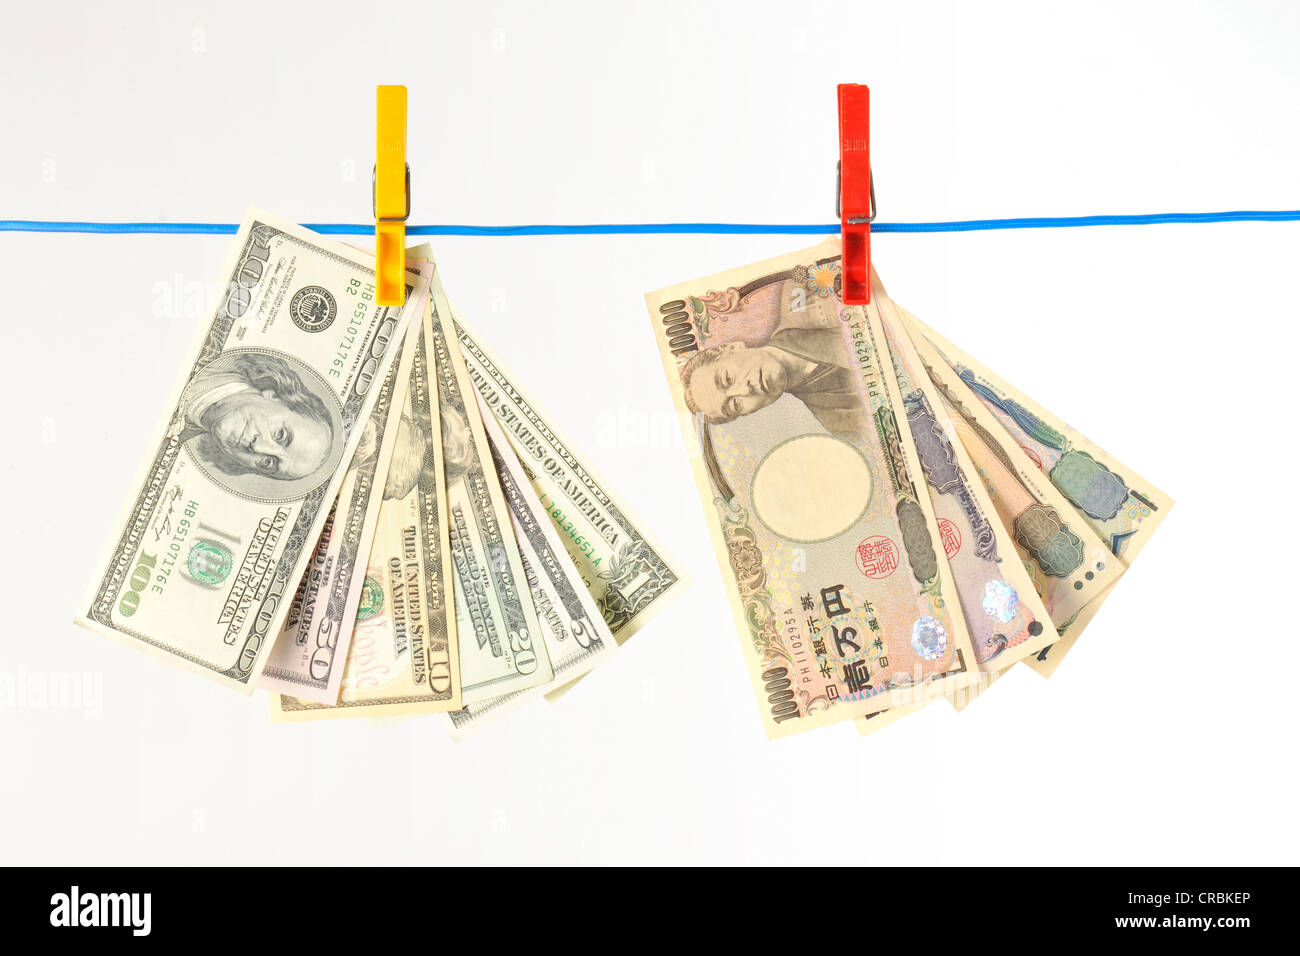 U.S. dollar and Japanese yen bills, notes on clothesline, symbolic image for money laundering, dirty money, exchange rate Stock Photo